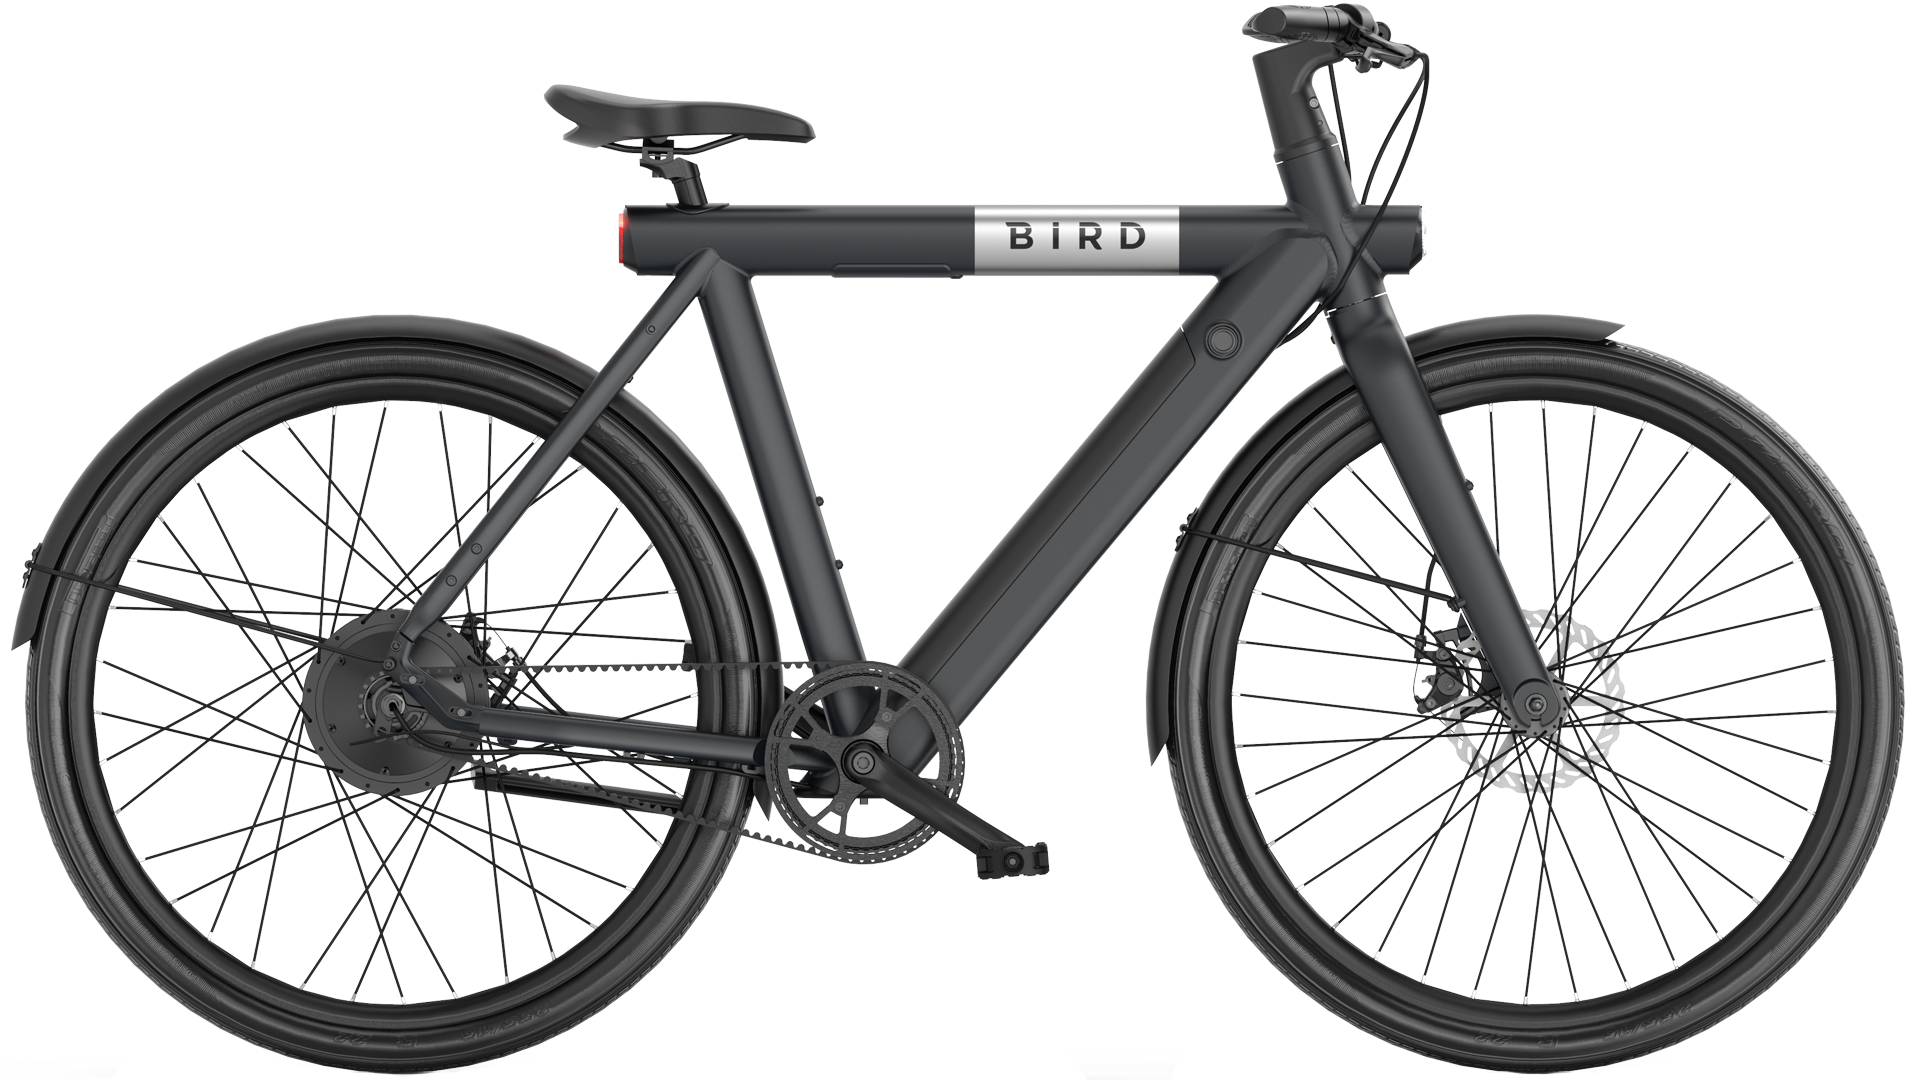 Bird Bike design